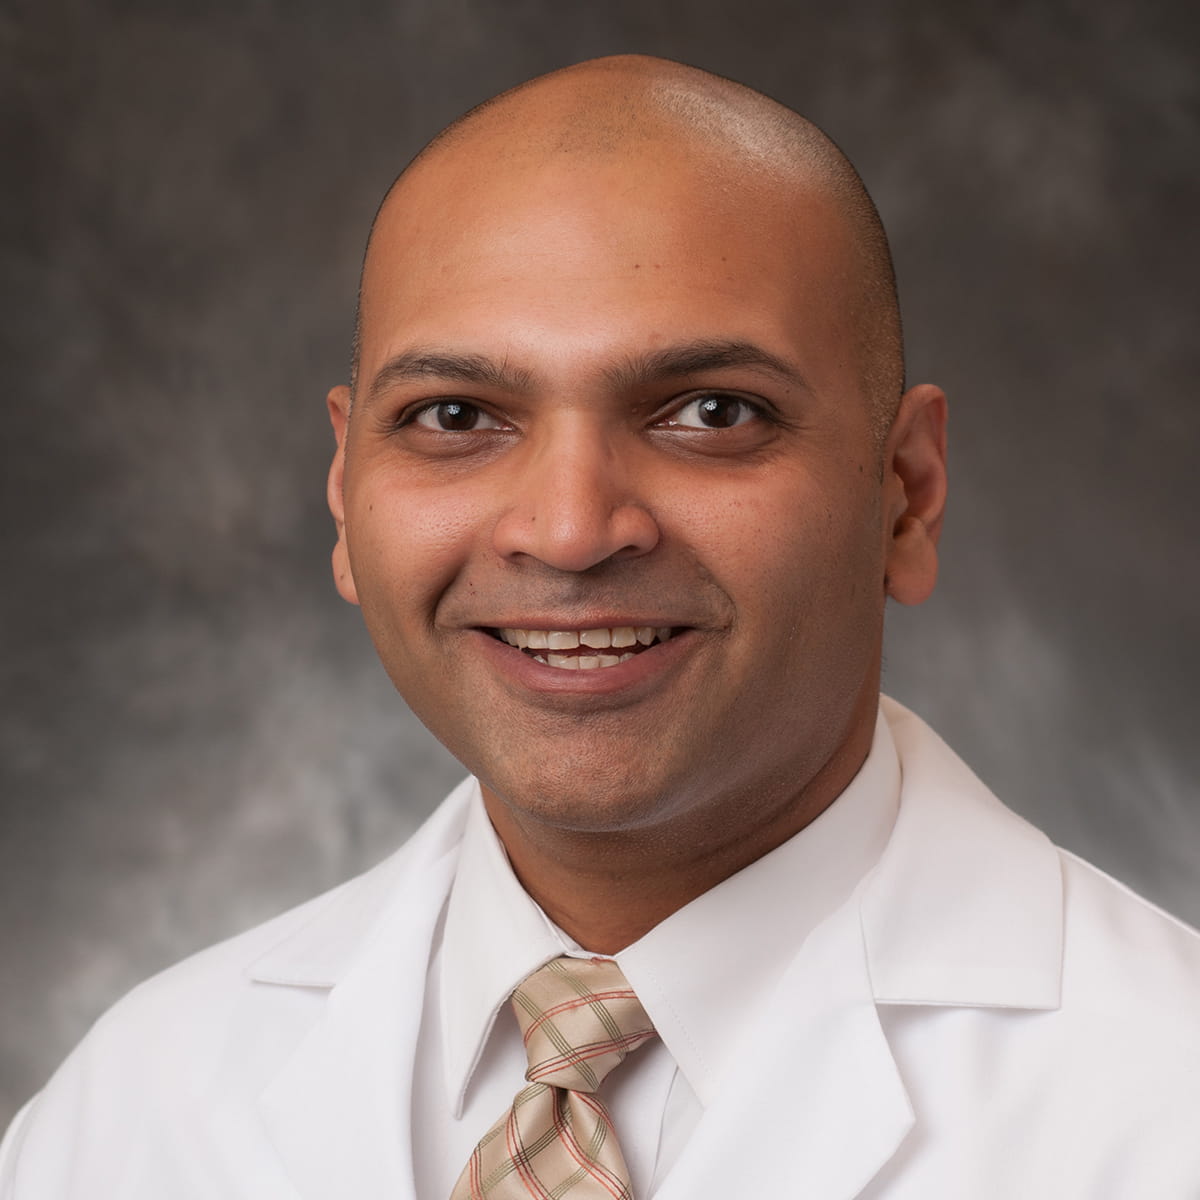 A friendly headshot of Hiren Patel, MD